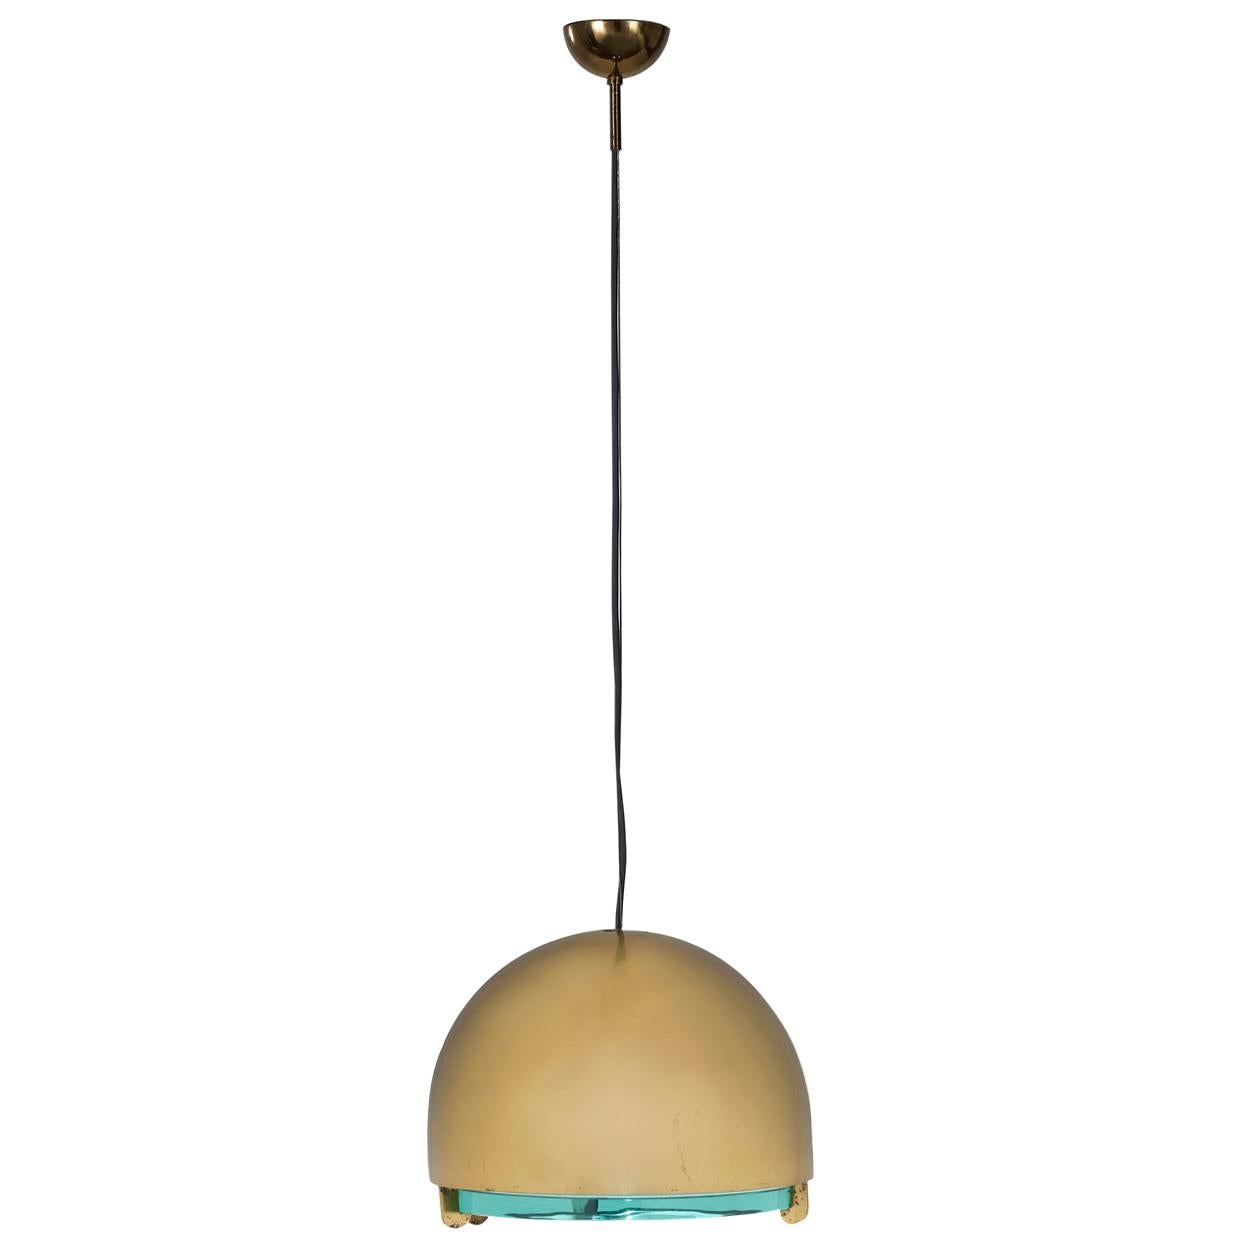 Max Ingrand Ceiling Lamp by Fontana Arte Model N 2409, 1960 circa